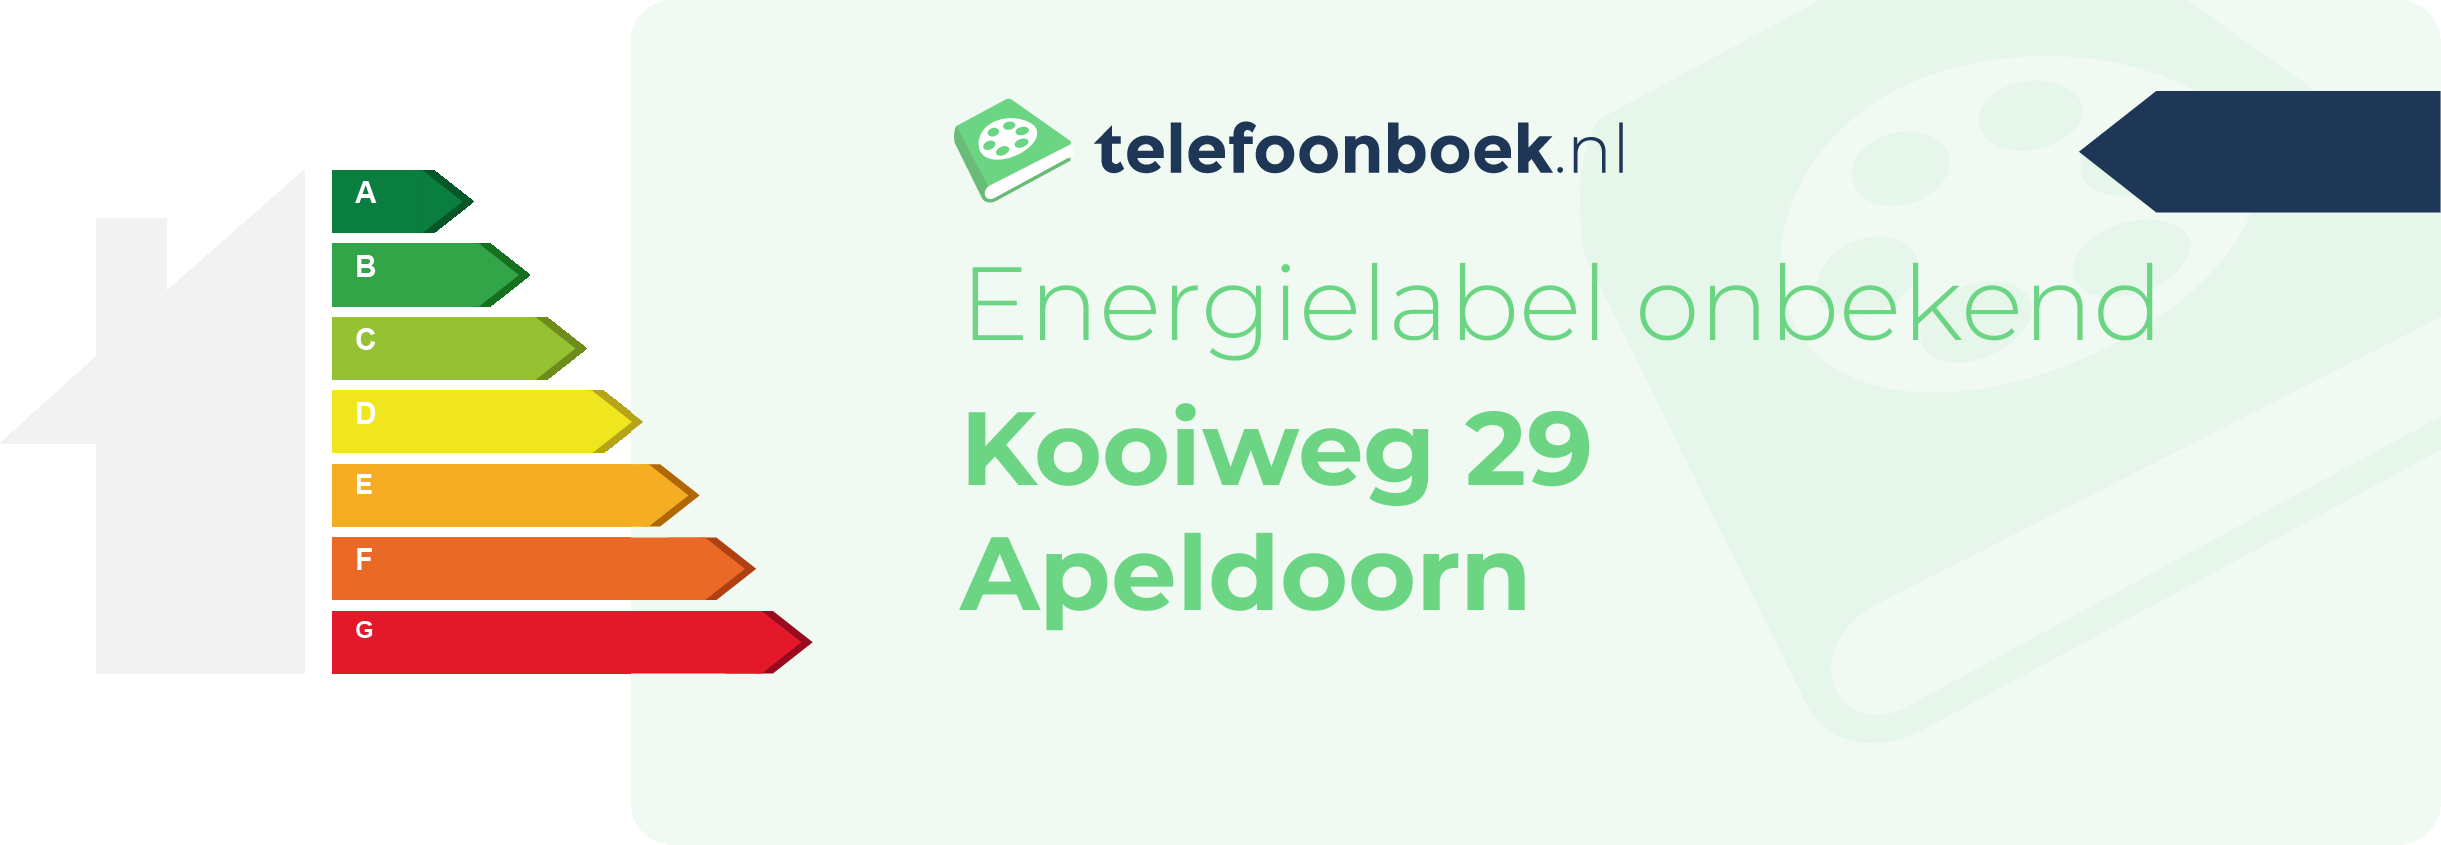 Energielabel Kooiweg 29 Apeldoorn